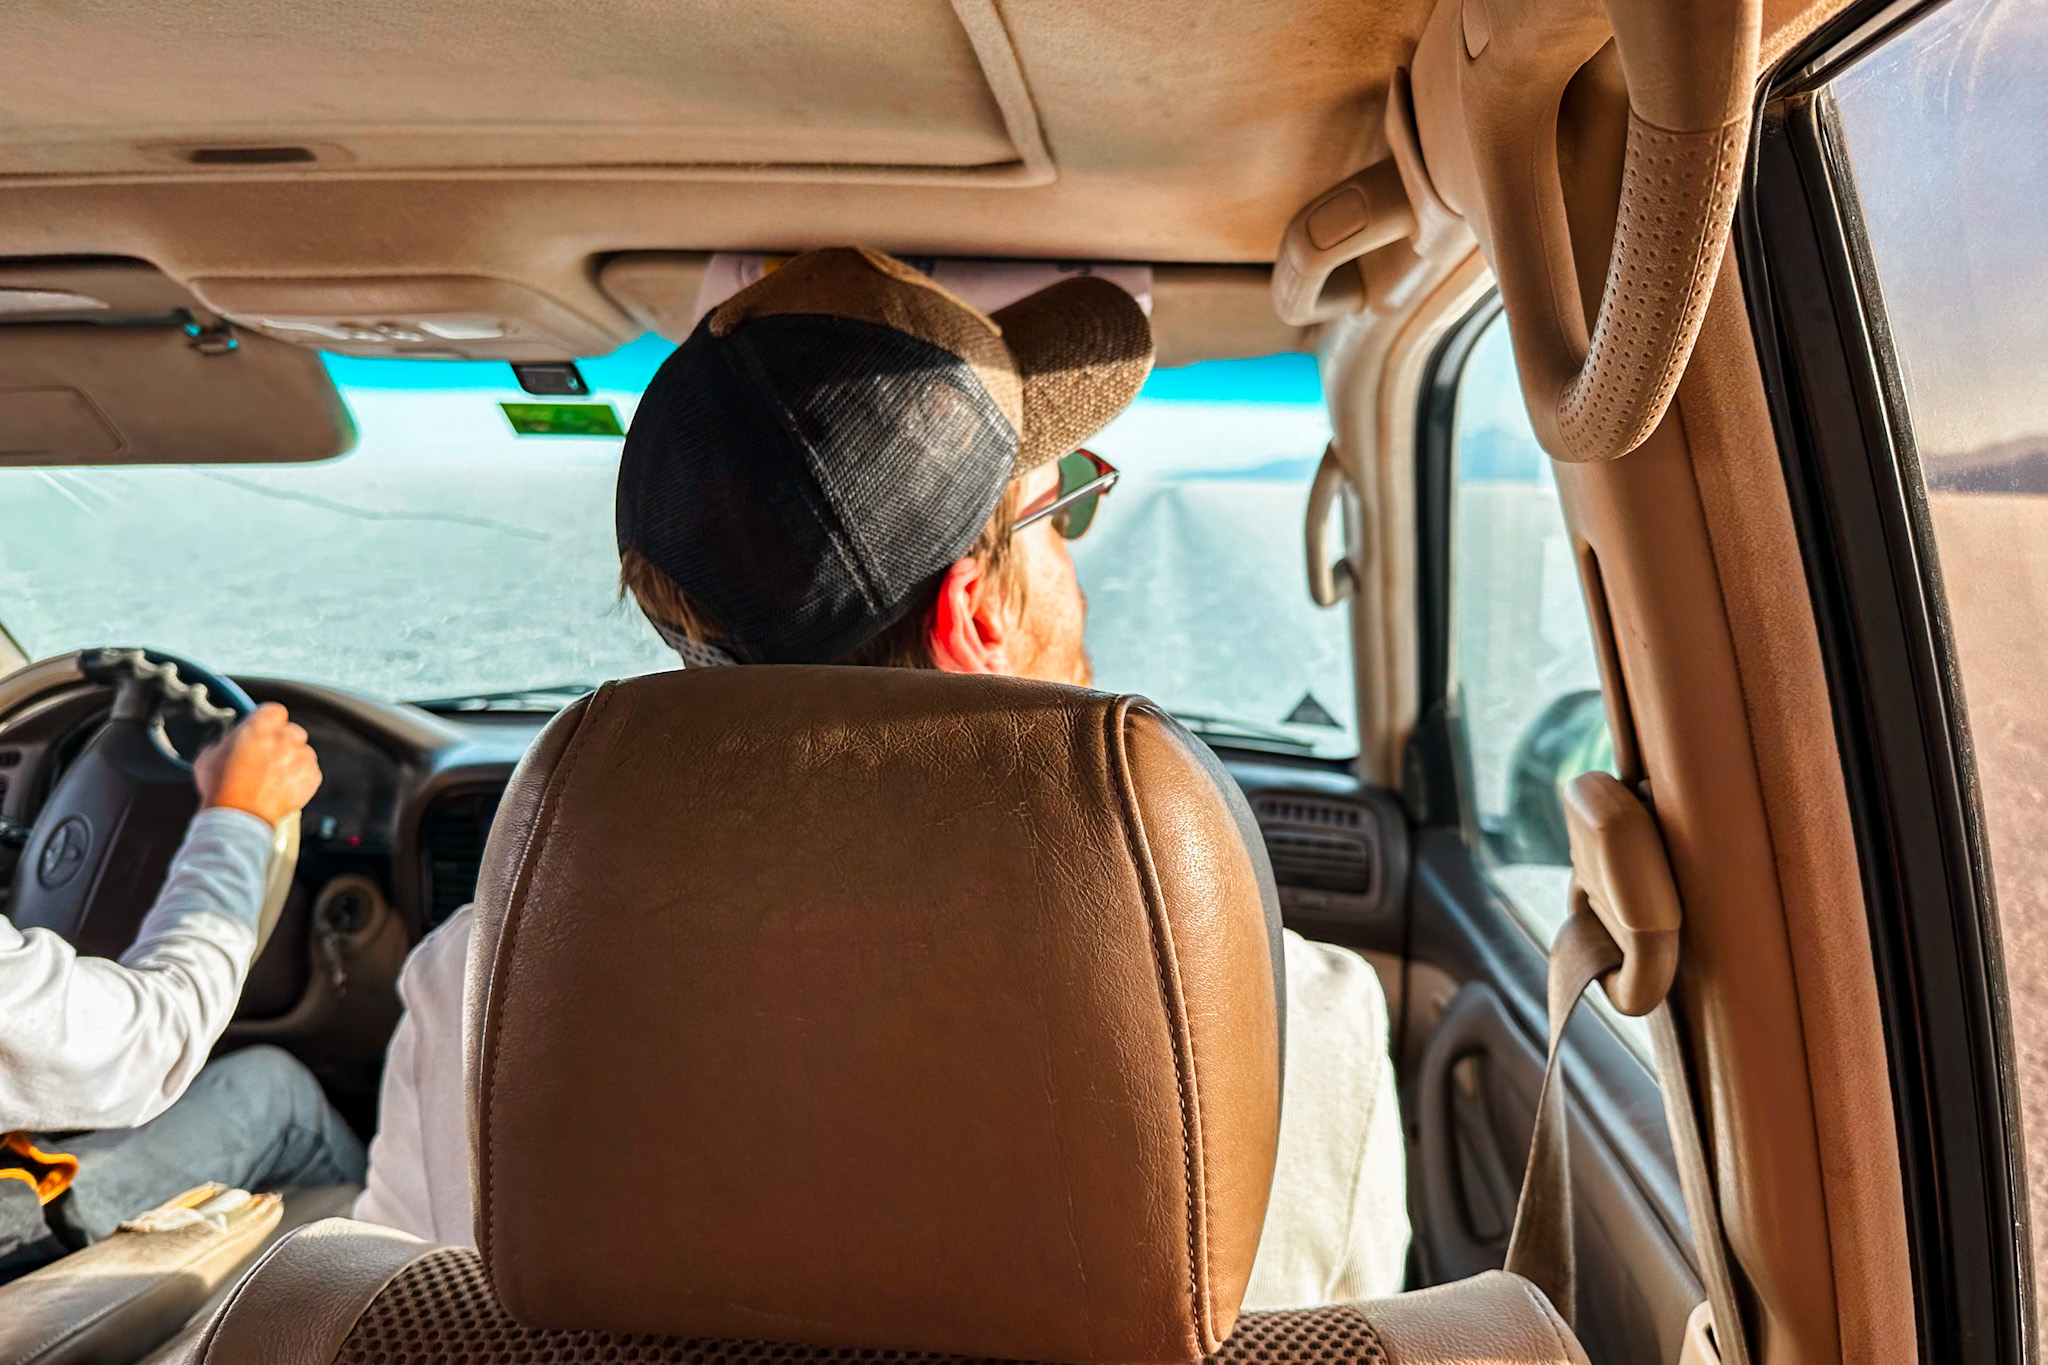 Uyuni Travel Guide: Driving a car across the vast Uyuni Salt Flat